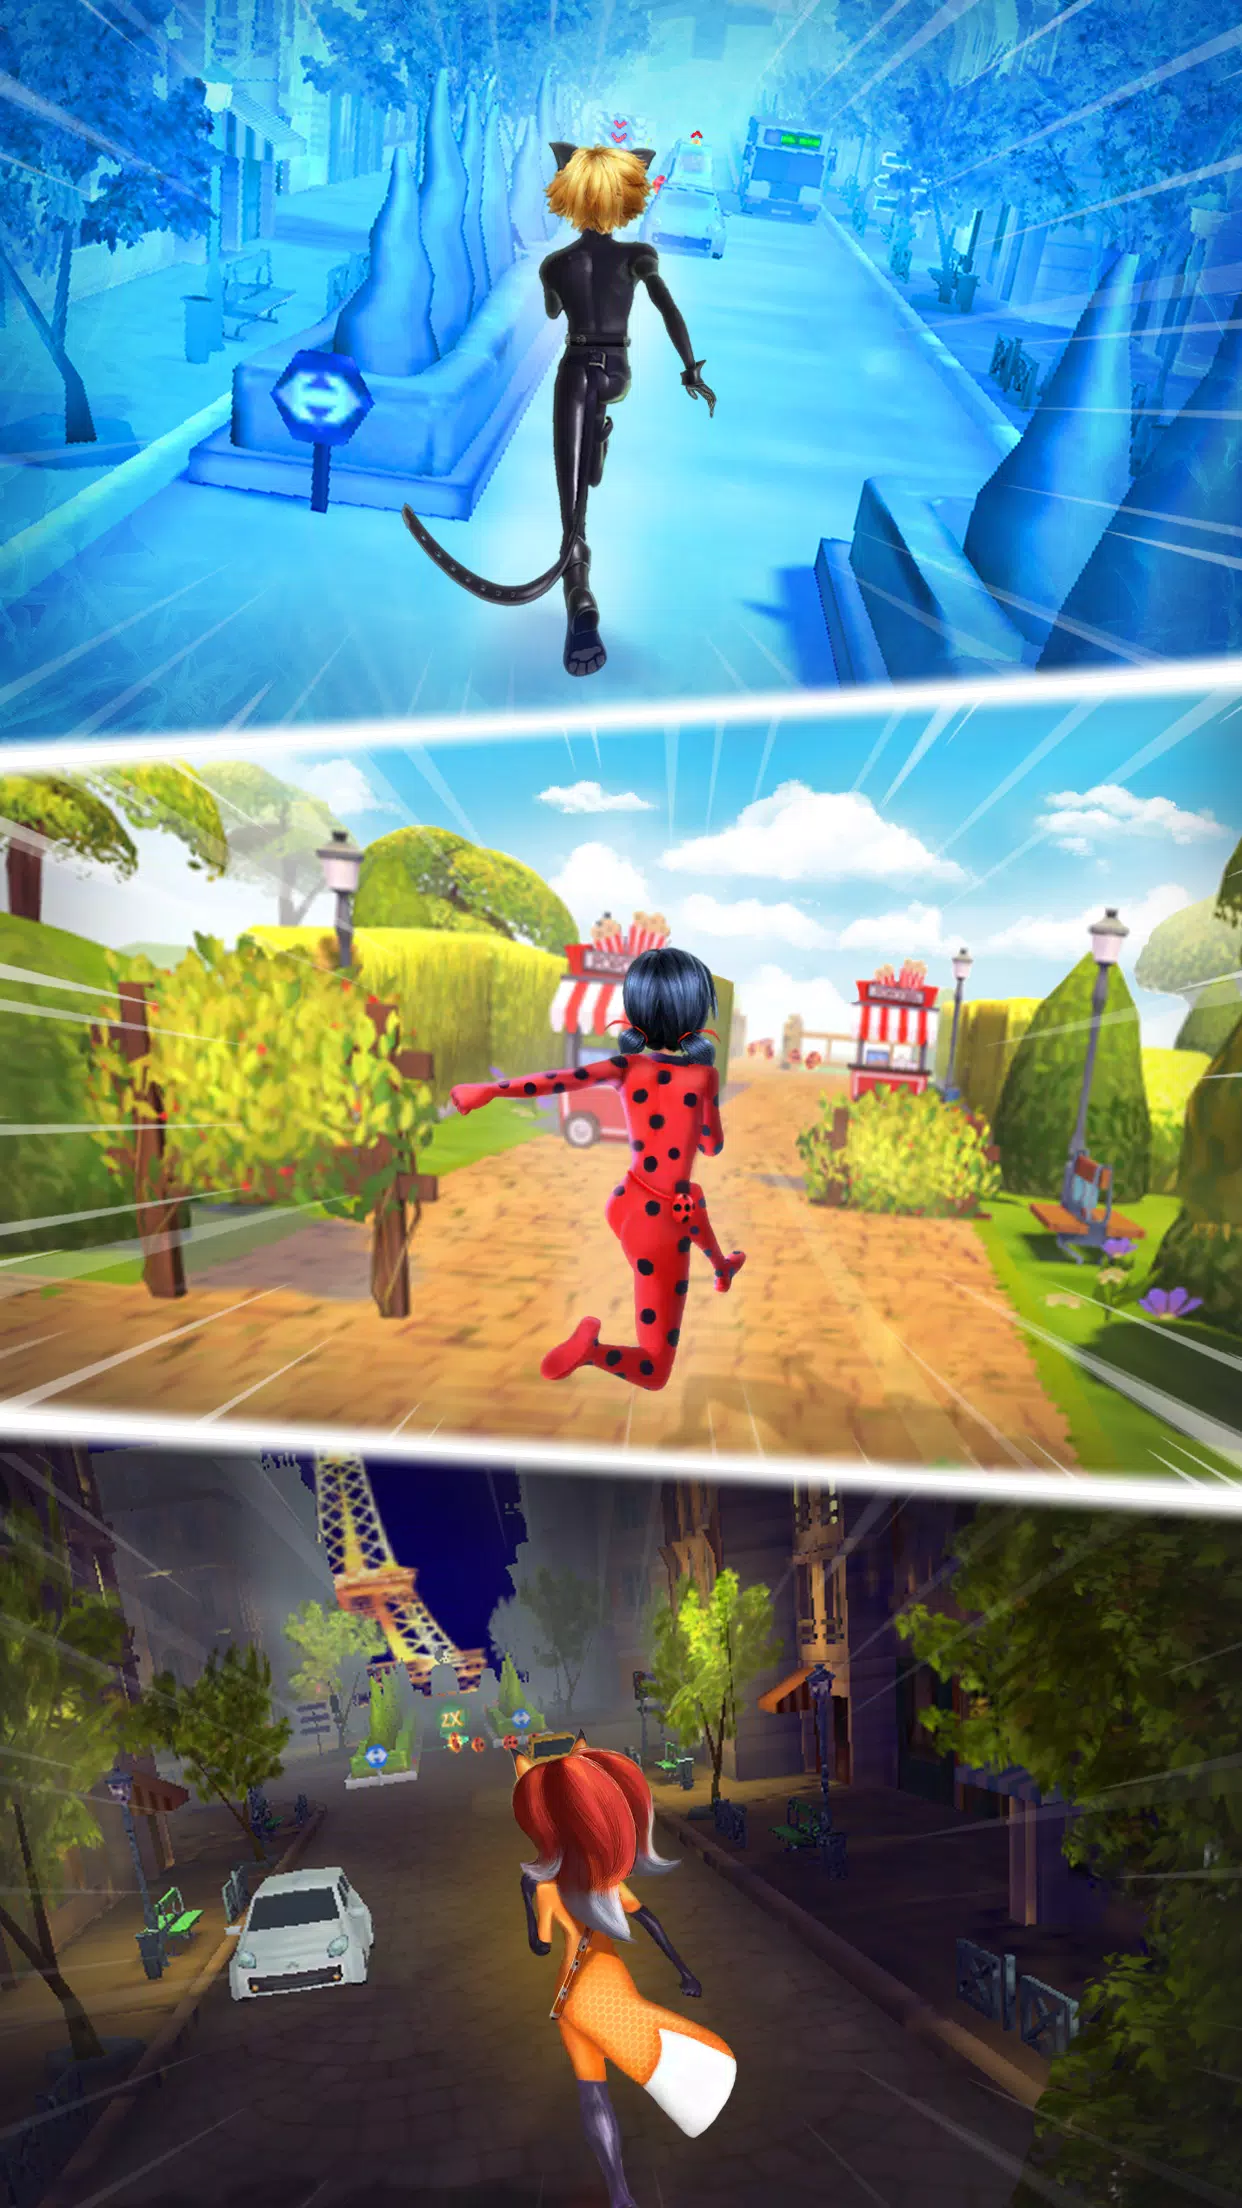 Miraculous Ladybug & Cat Noir 5.1.20 APK Download by CrazyLabs LTD